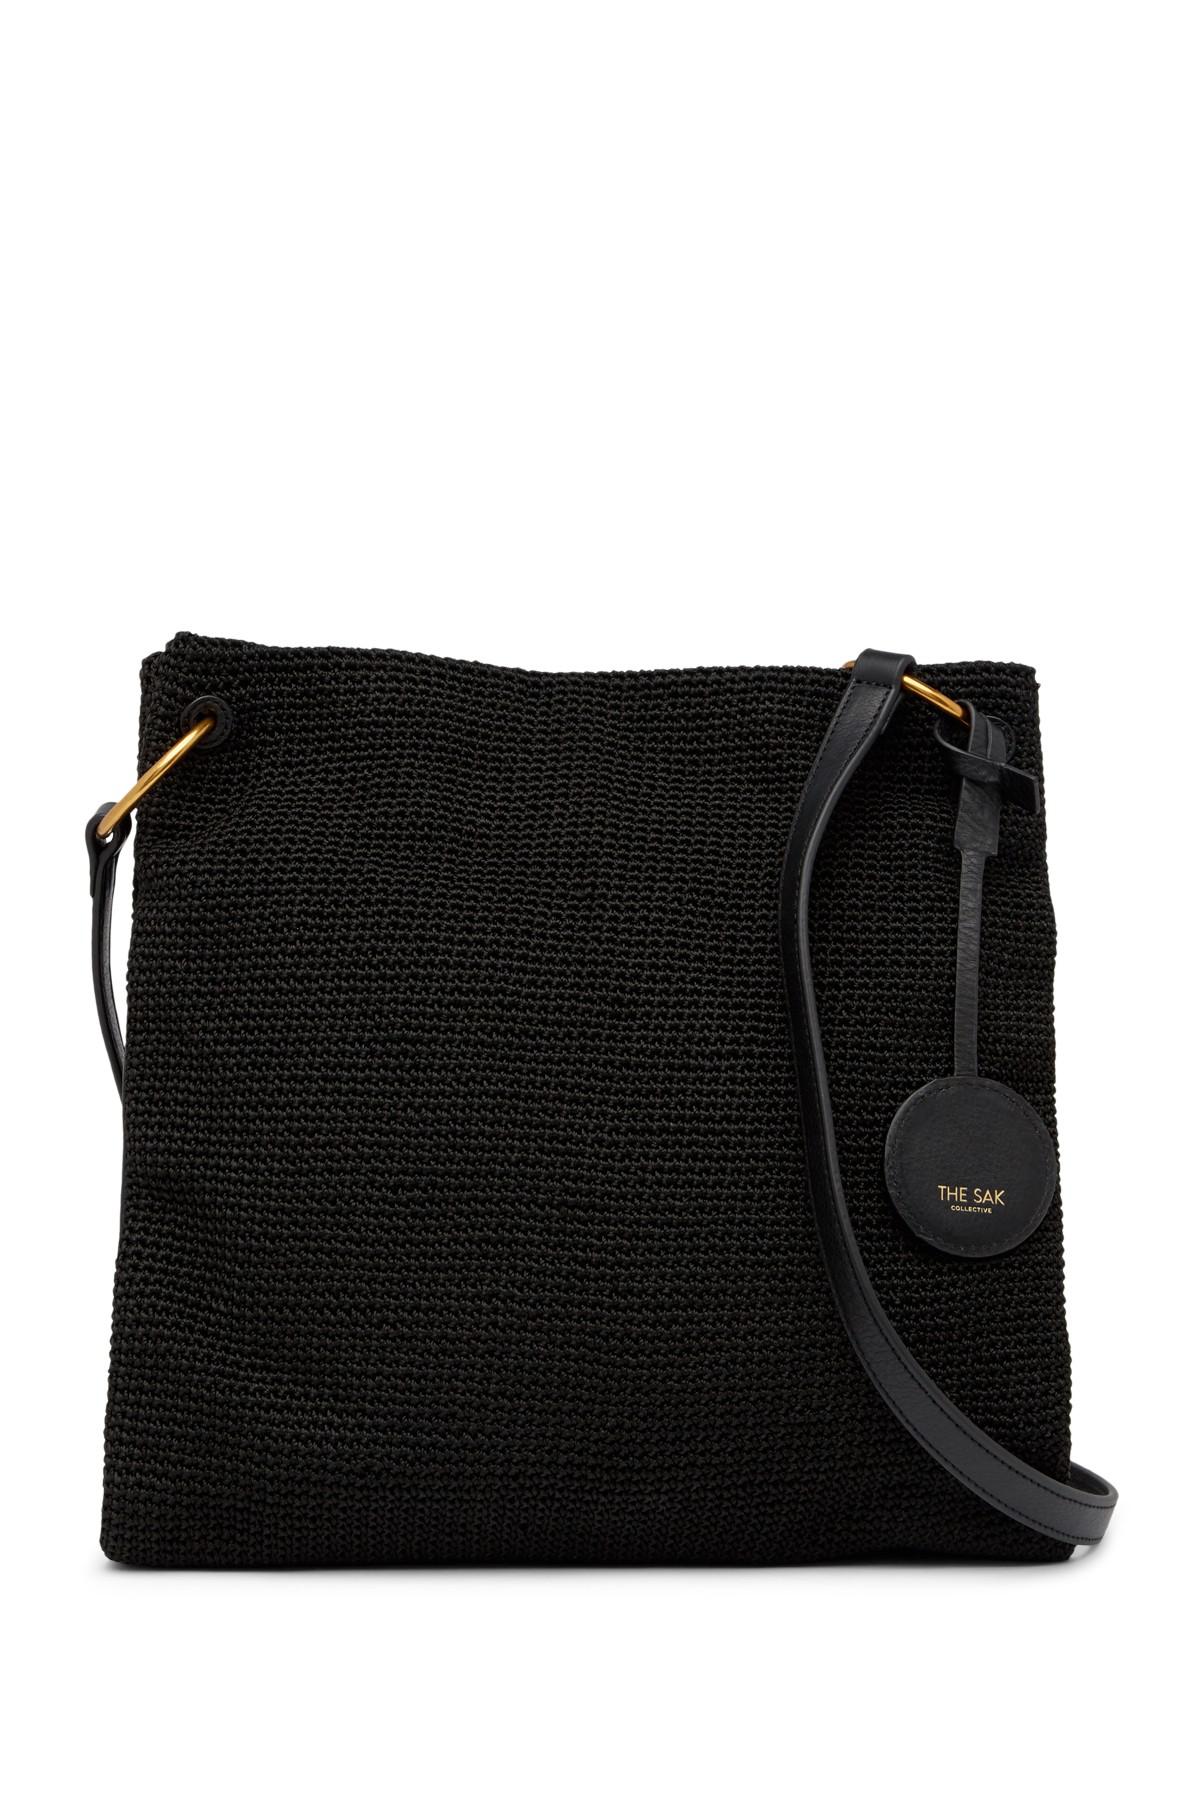 The Sak Crochet Seventy Crossbody Bag in Black - Lyst